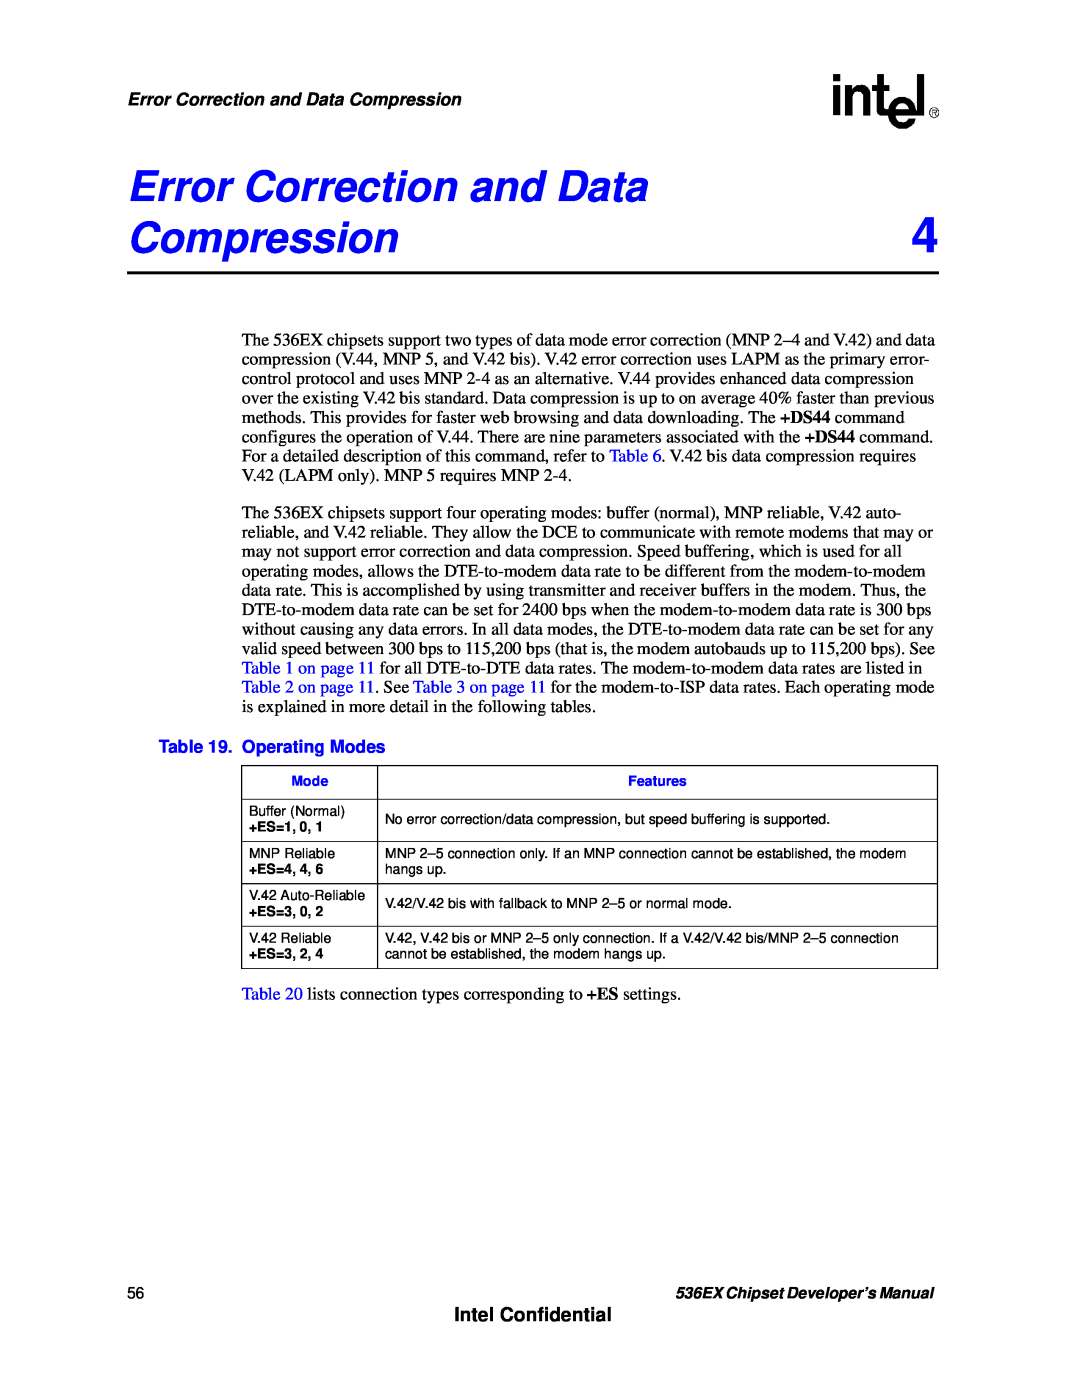 Intel 537EX manual Error Correction and Data Compression4, Intel Confidential, Operating Modes 